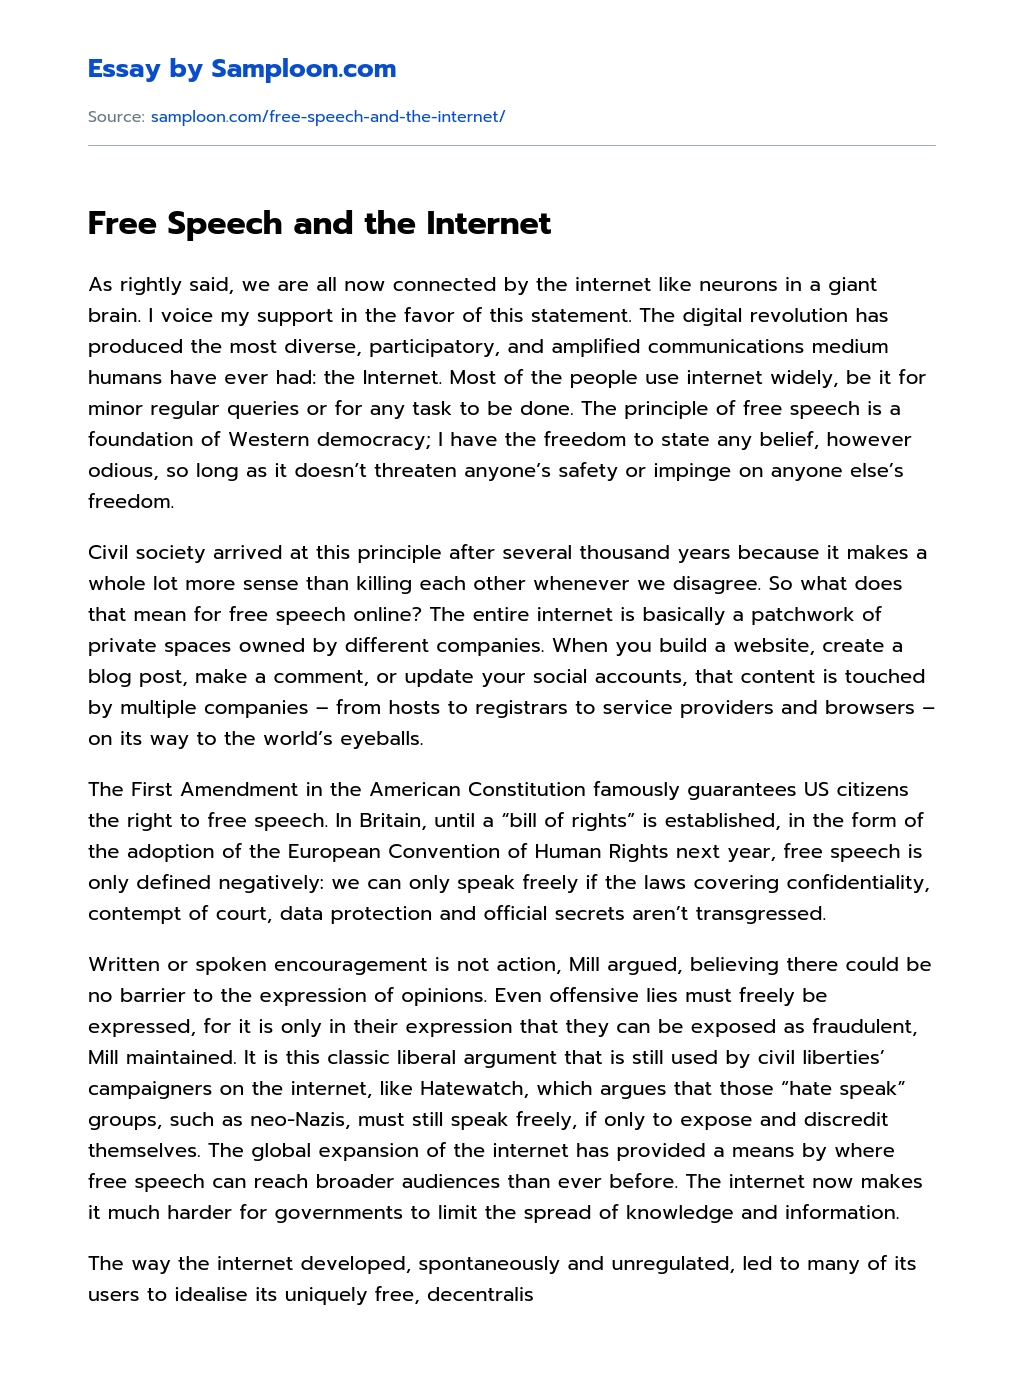 Free Speech and the Internet essay